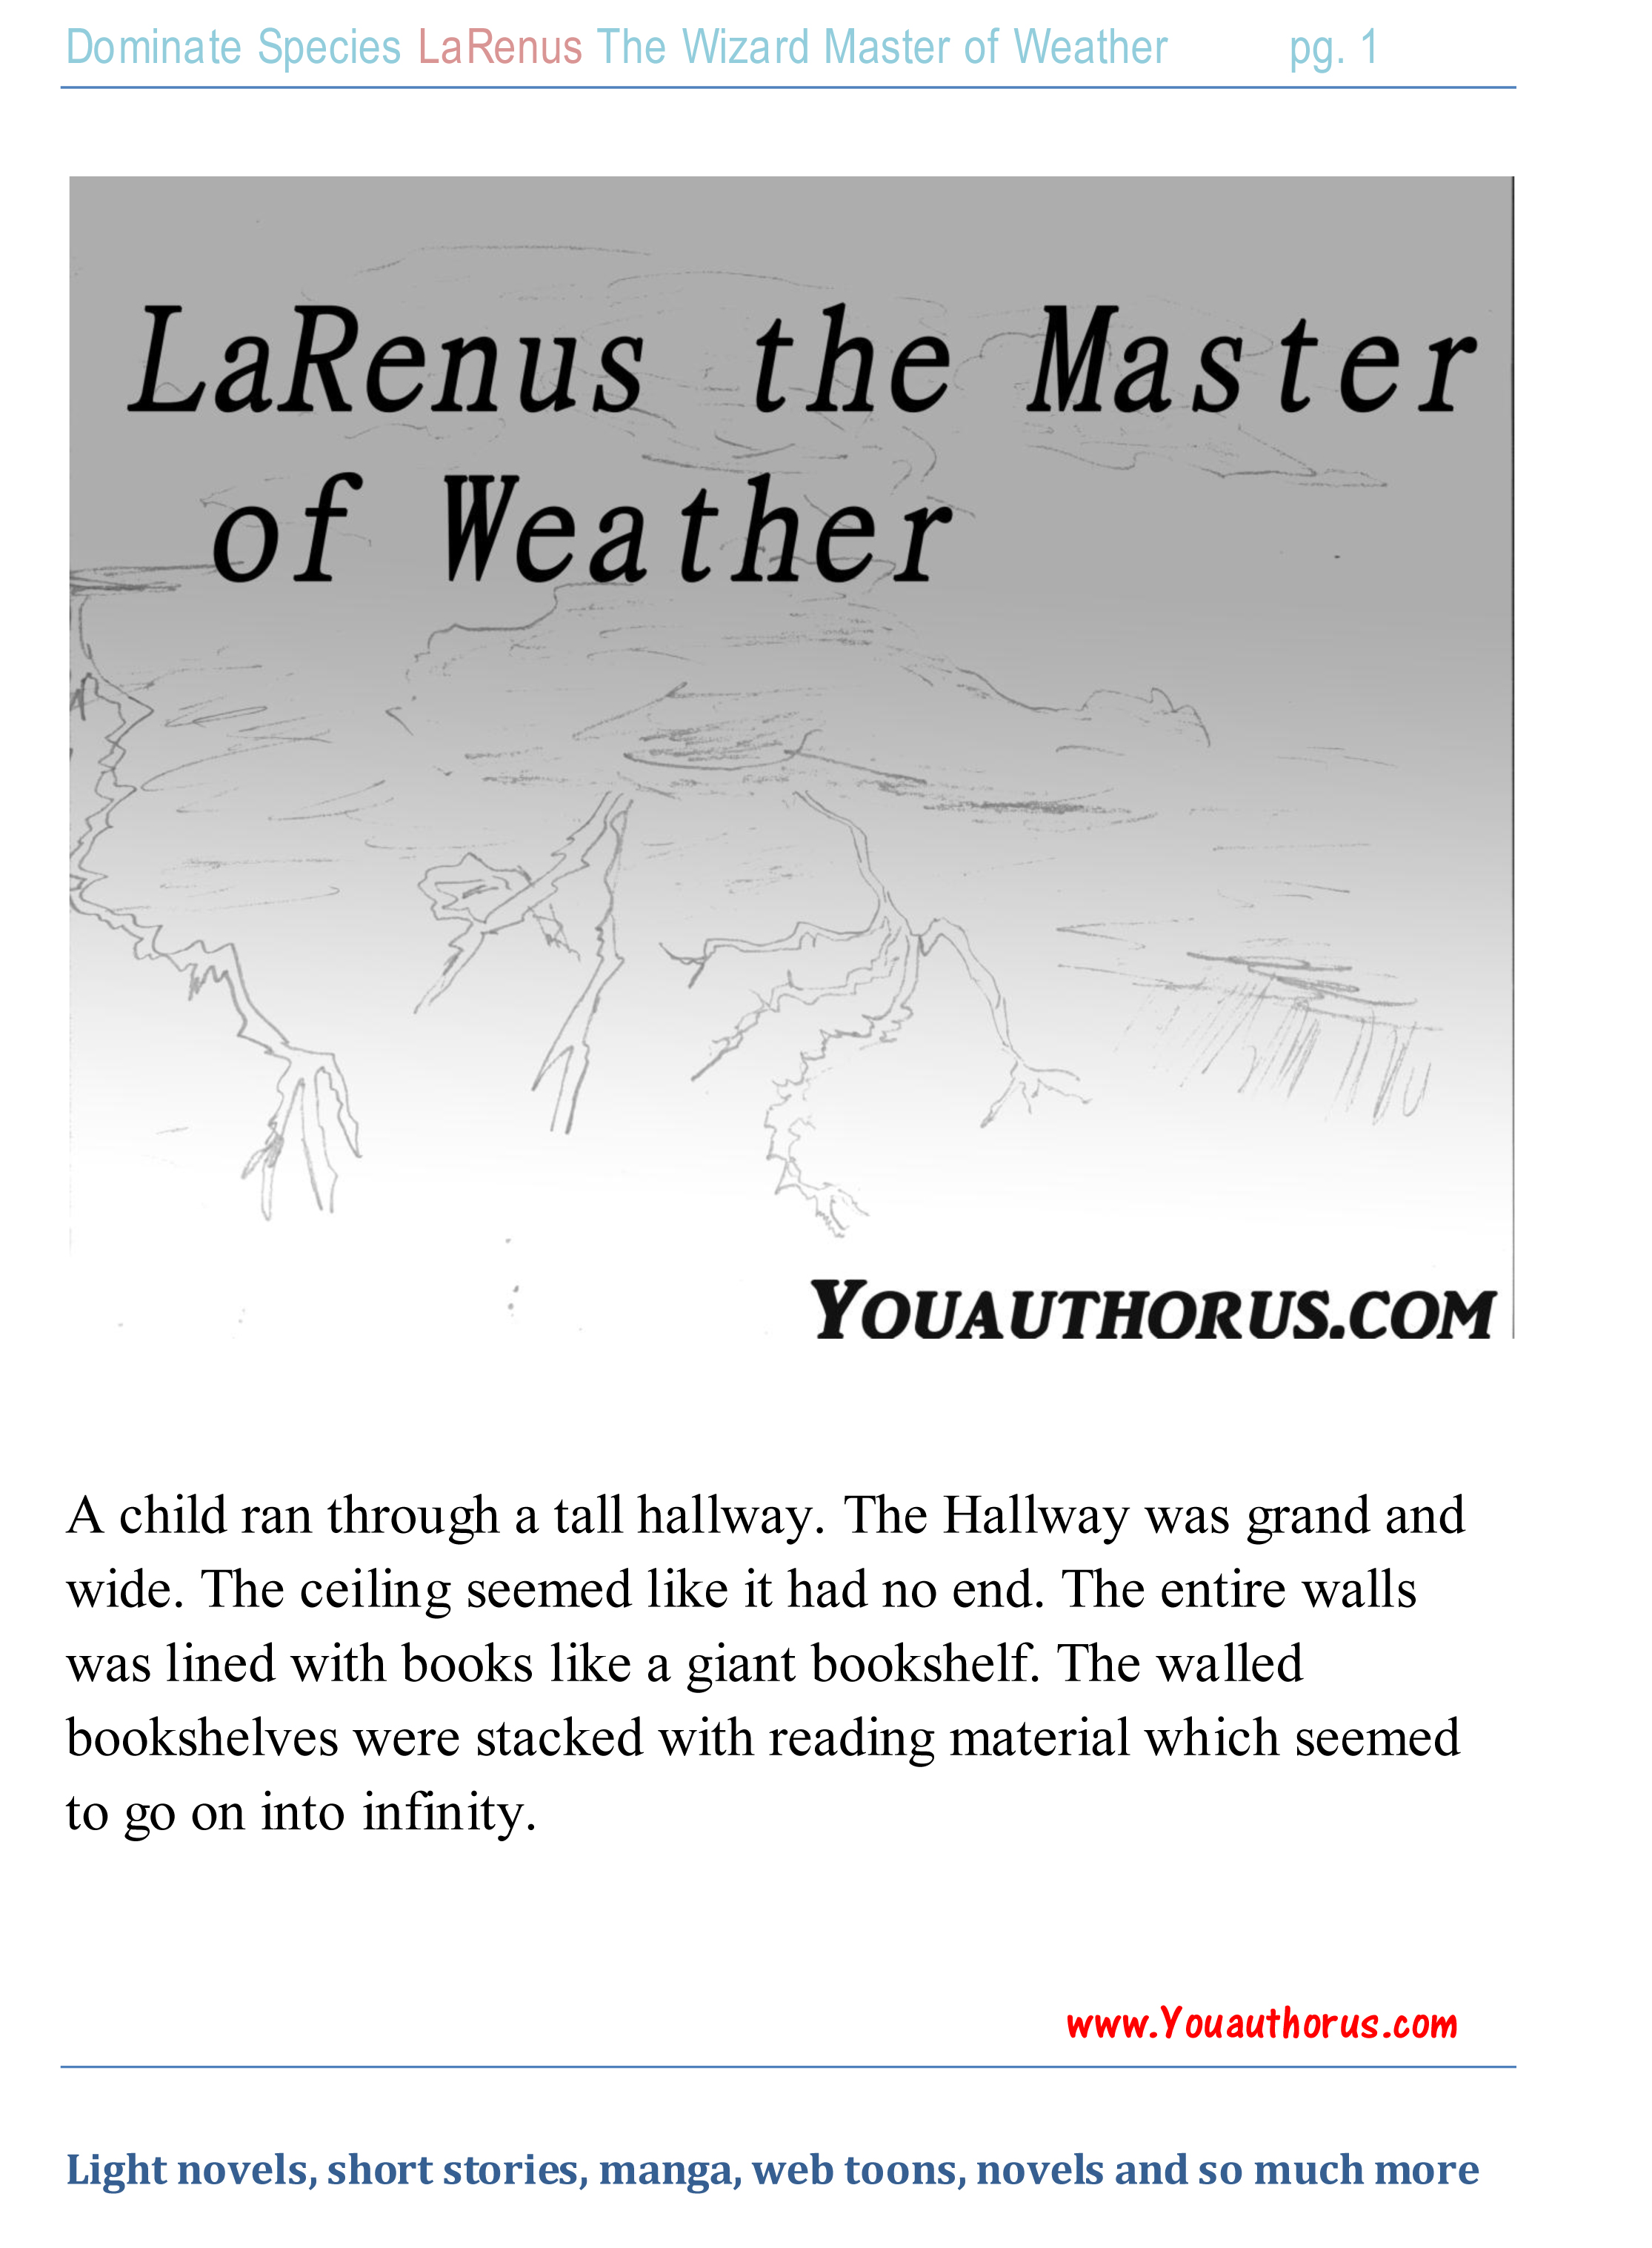 Dominate Species LaRenus the wizard master of weather-1 copy